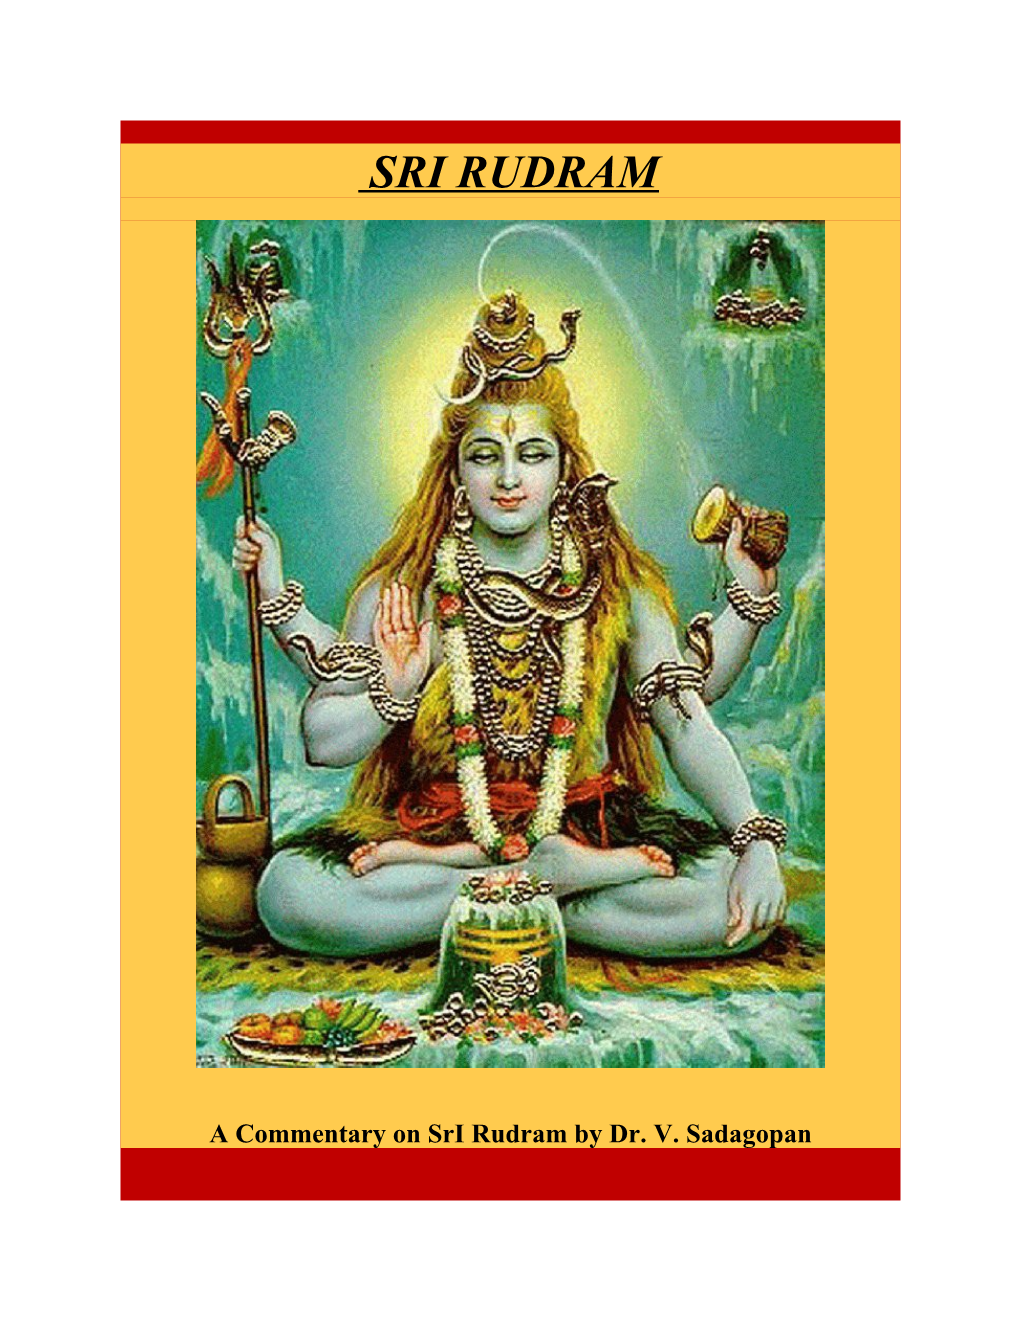 A Commentary on Sri Rudram by Dr. V. Sadagopan